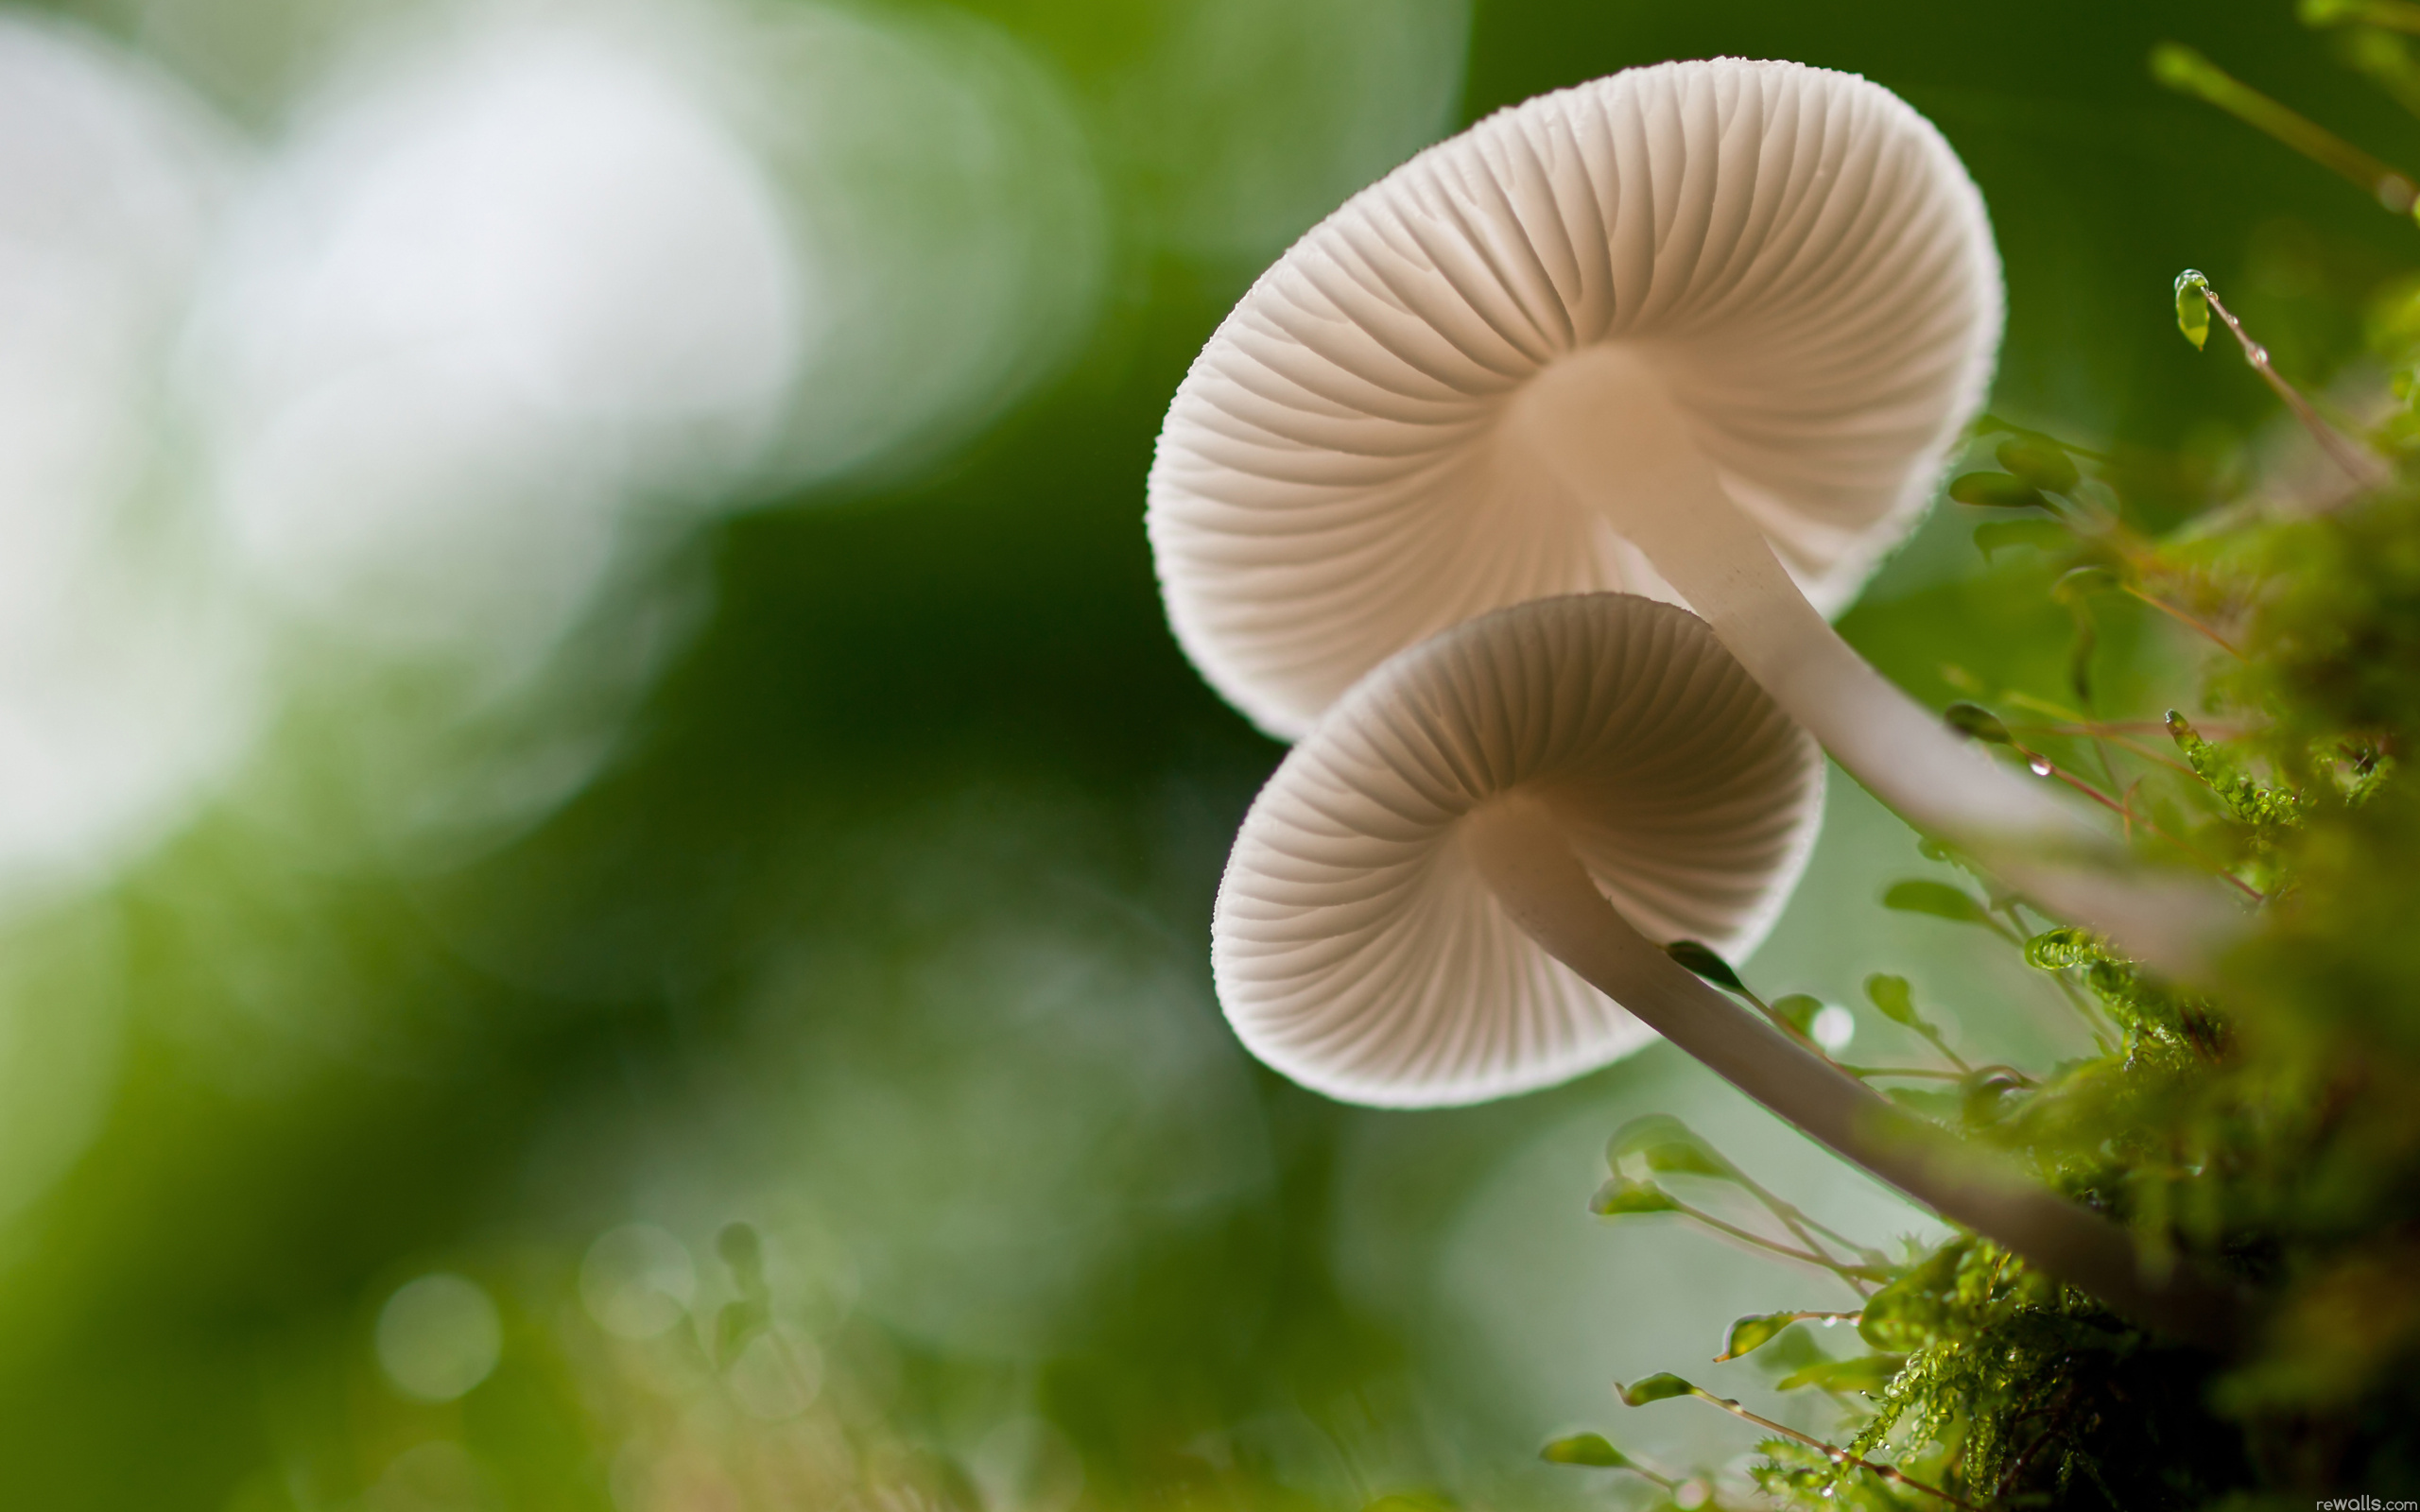 Mushroom Wallpaper And Background Image